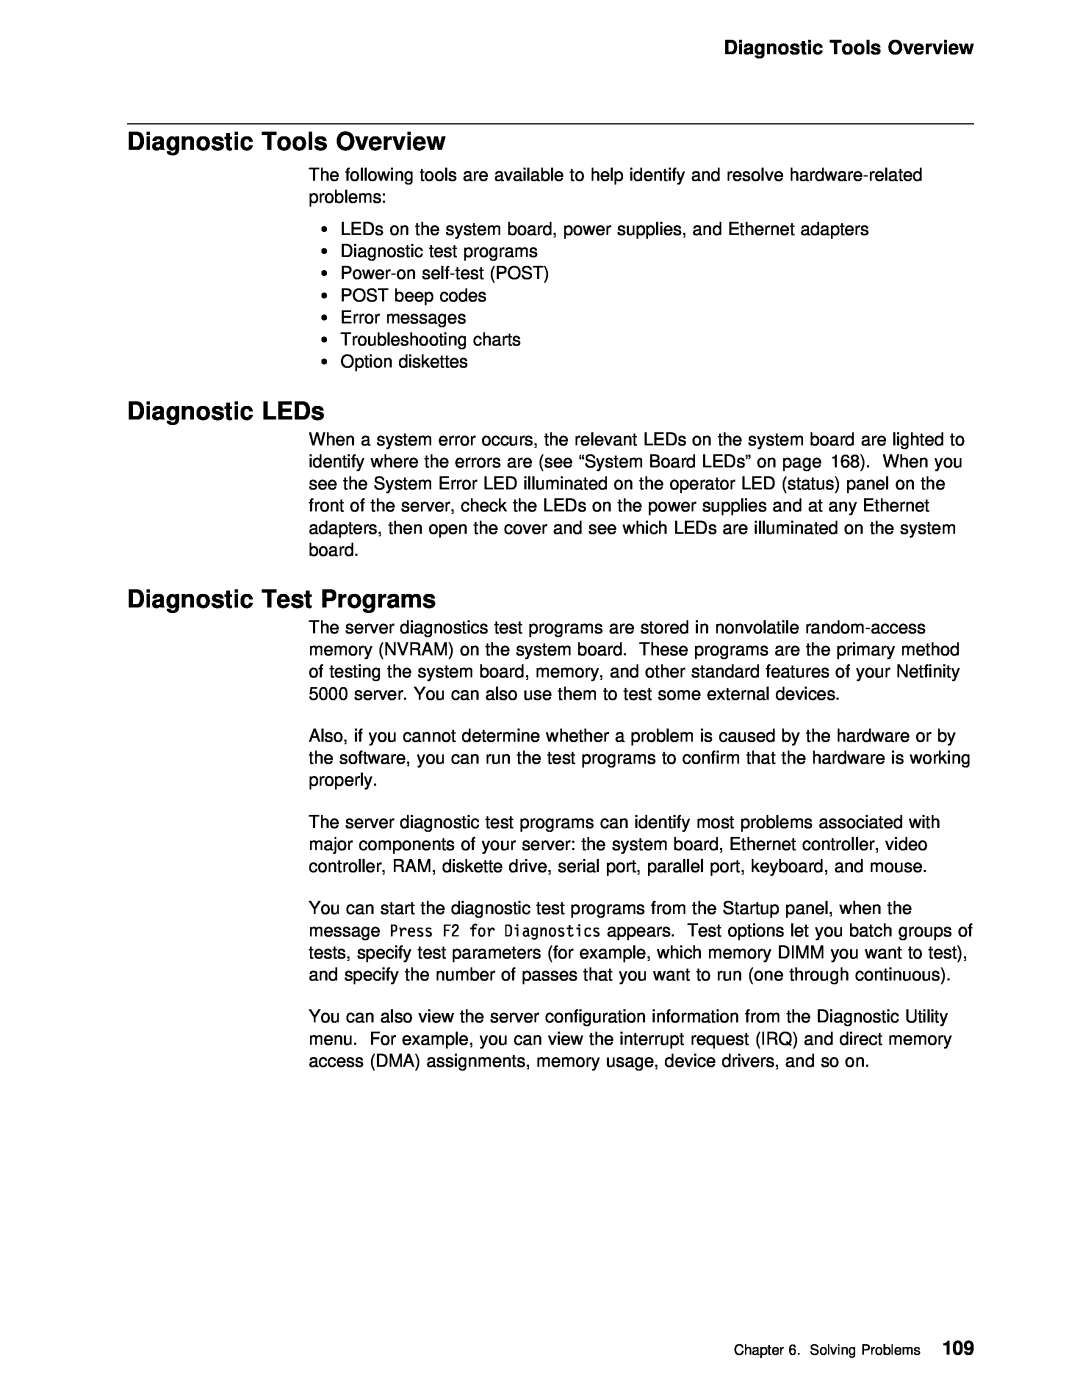 IBM 5000 manual Diagnostic Tools Overview, Diagnostic LEDs, Diagnostic Test Programs 